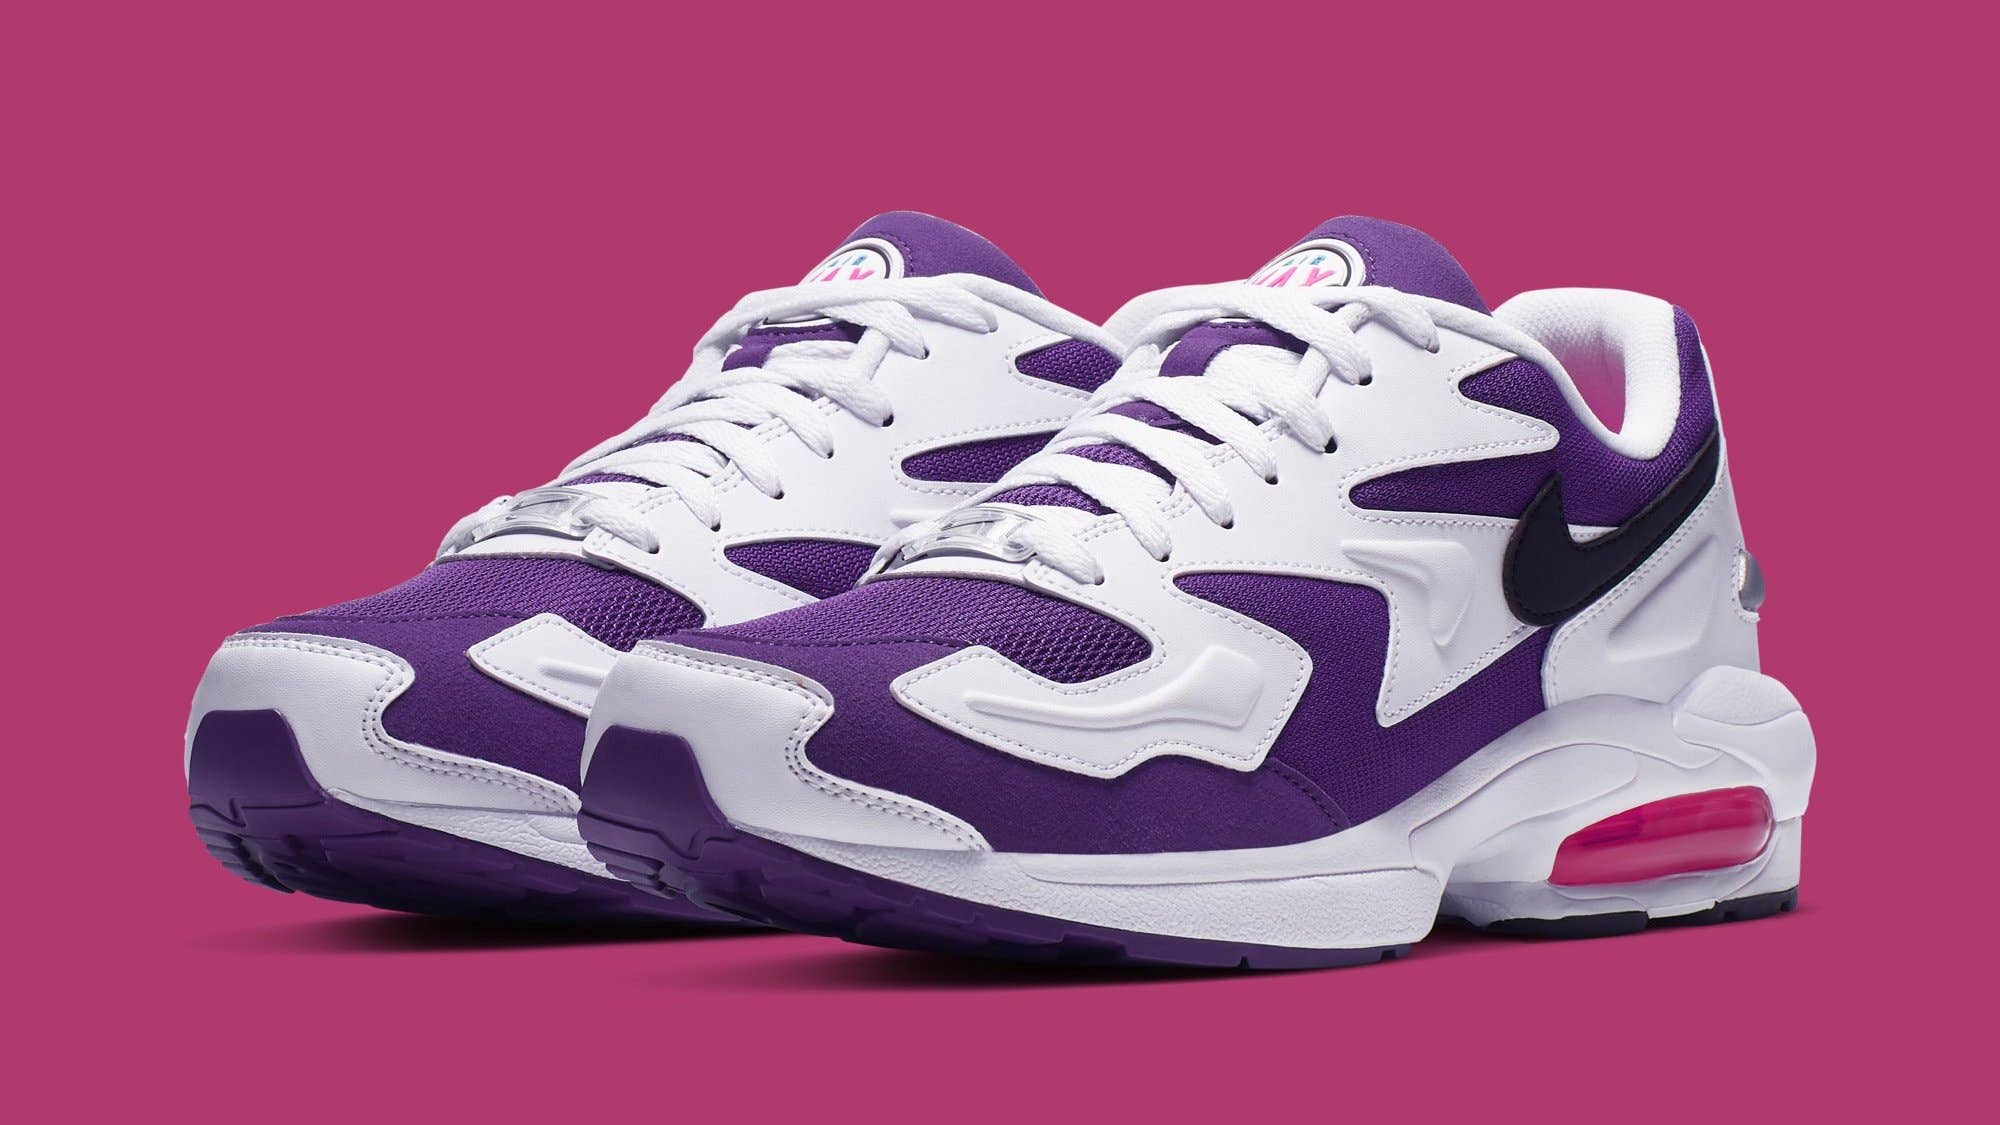 Nike Air Max2 Light 'White/Court Purple Hyper Pink' AO1741 103 (Pair)